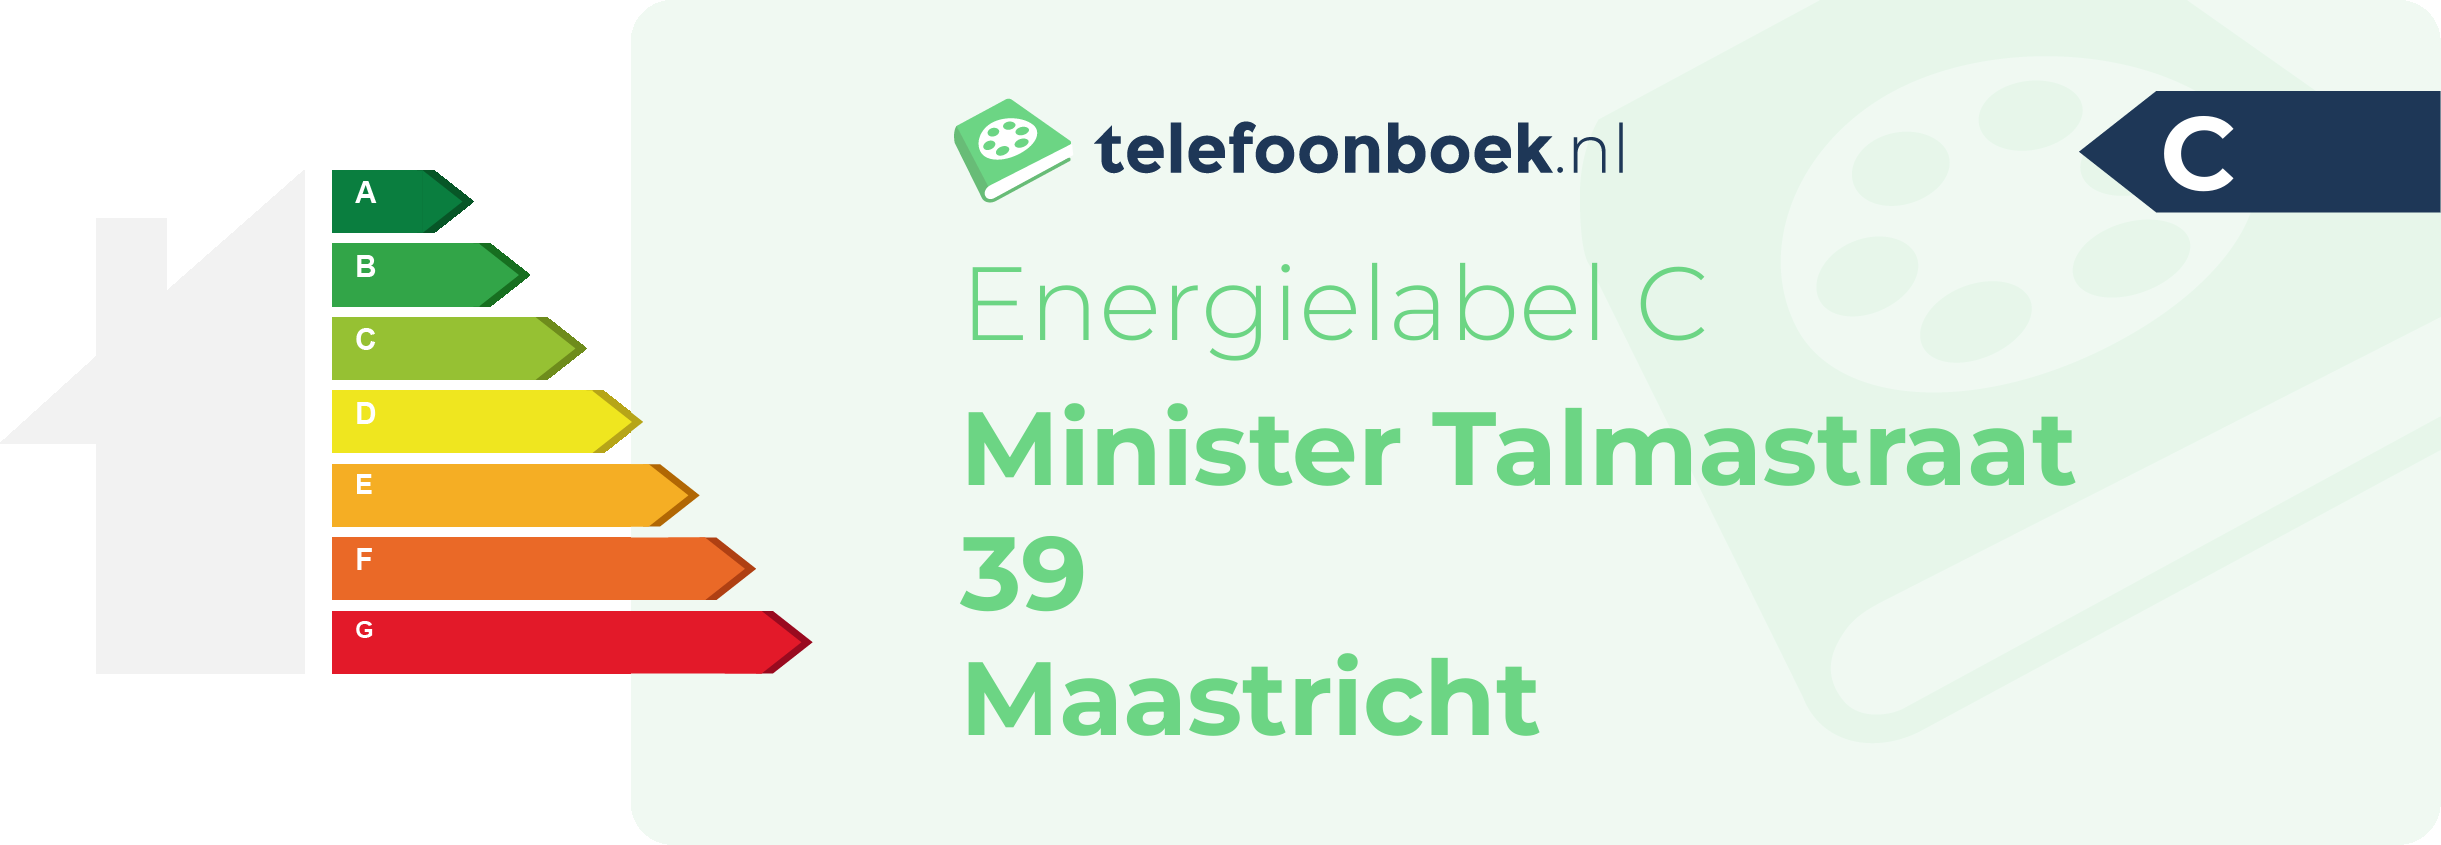 Energielabel Minister Talmastraat 39 Maastricht